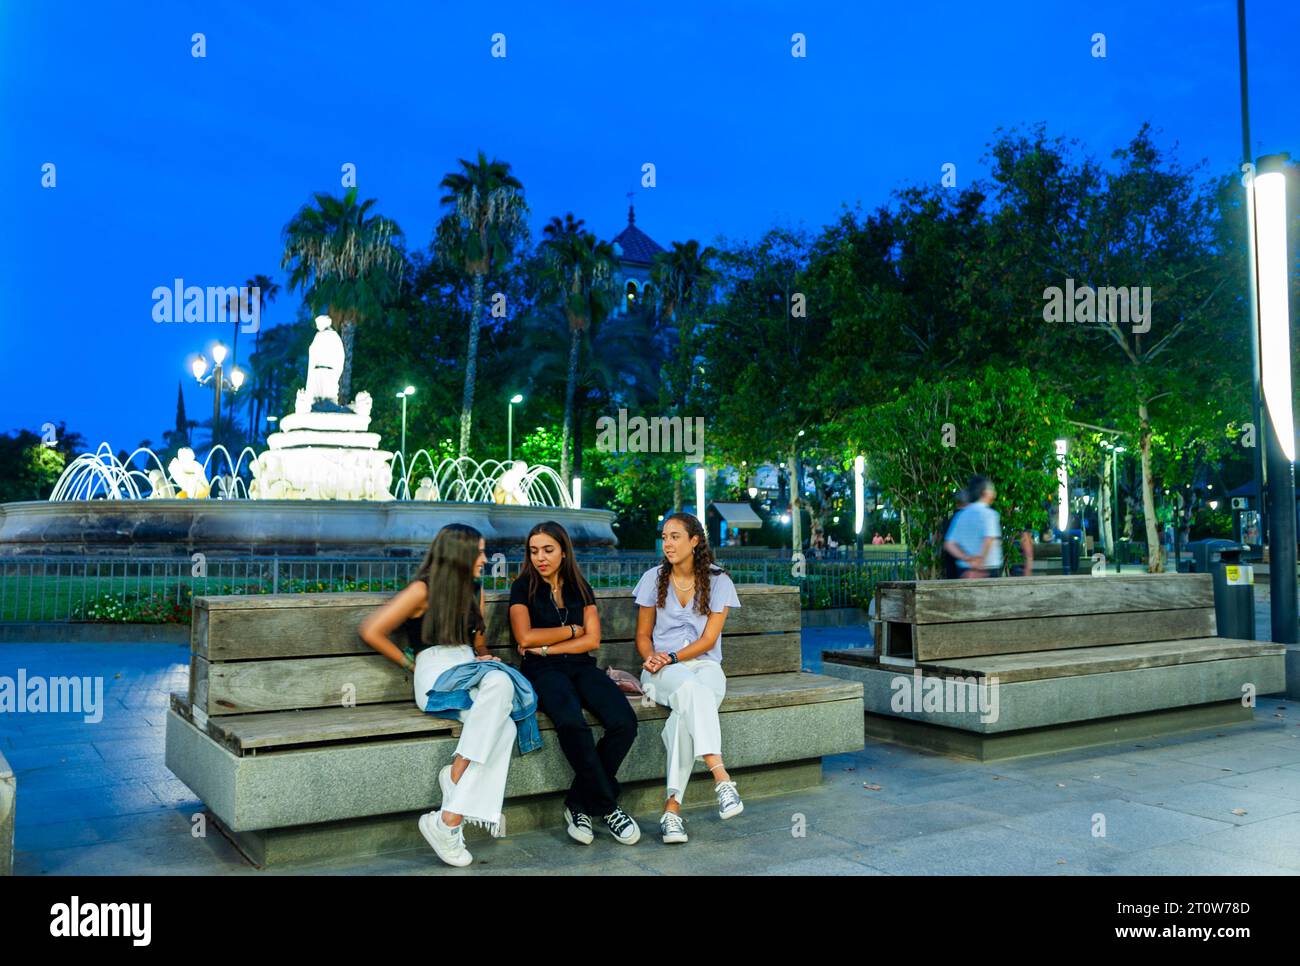 Seville, Spain, Street Scene, Small Group People, Girls, Sitting, Tourists Visiting City Center, Night, Ave. de la Constitution, neighborhoods Stock Photo